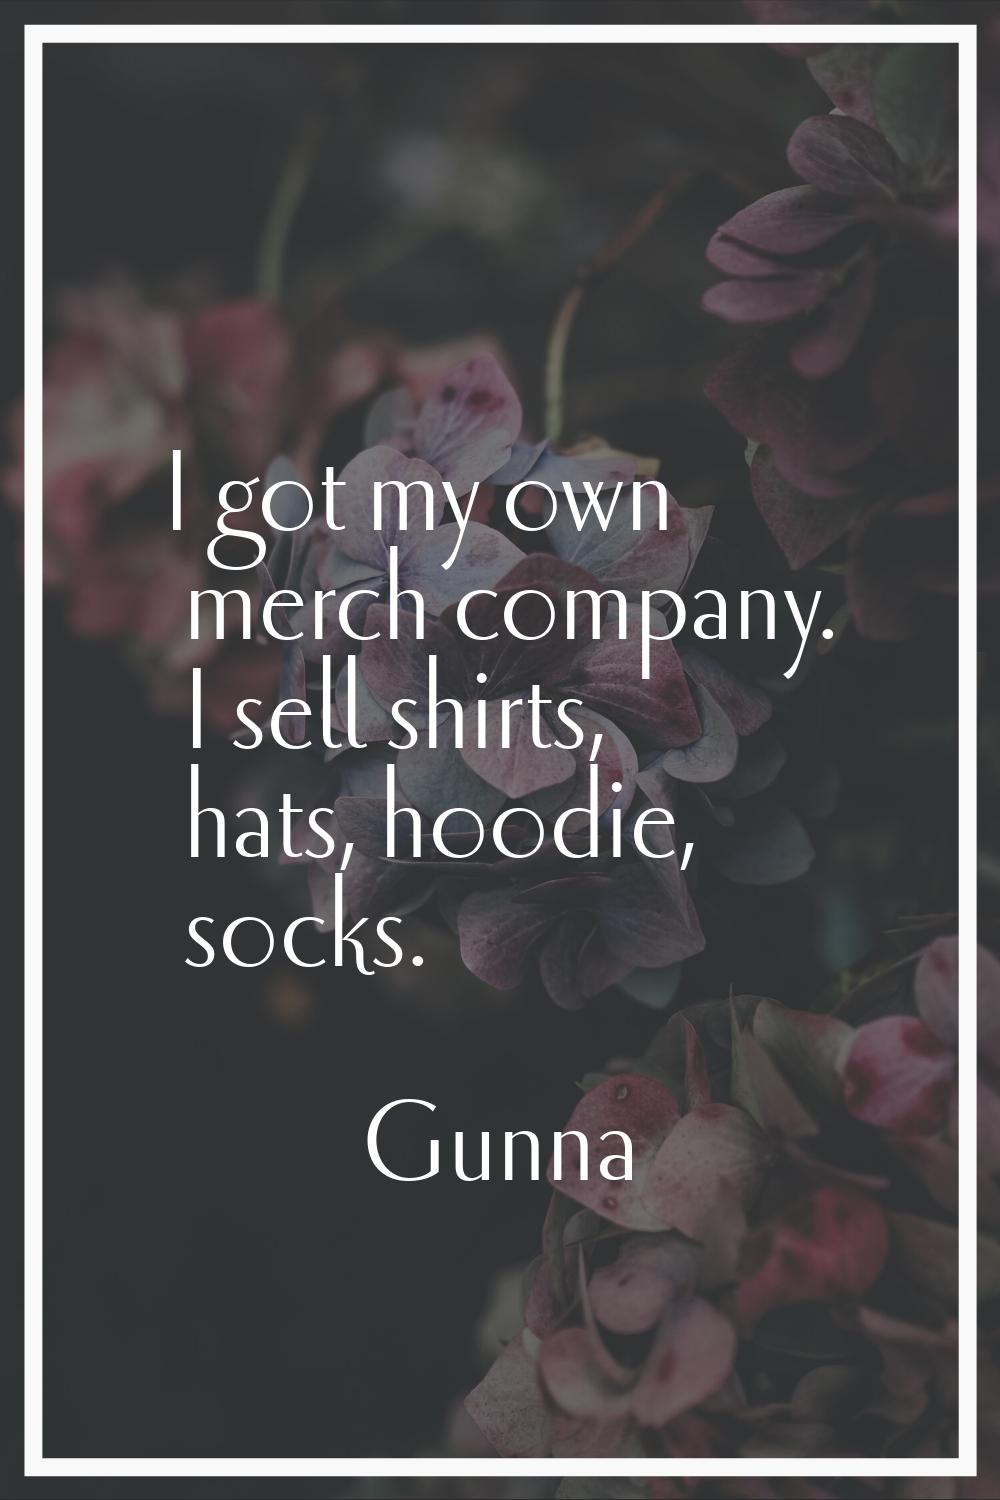 I got my own merch company. I sell shirts, hats, hoodie, socks.